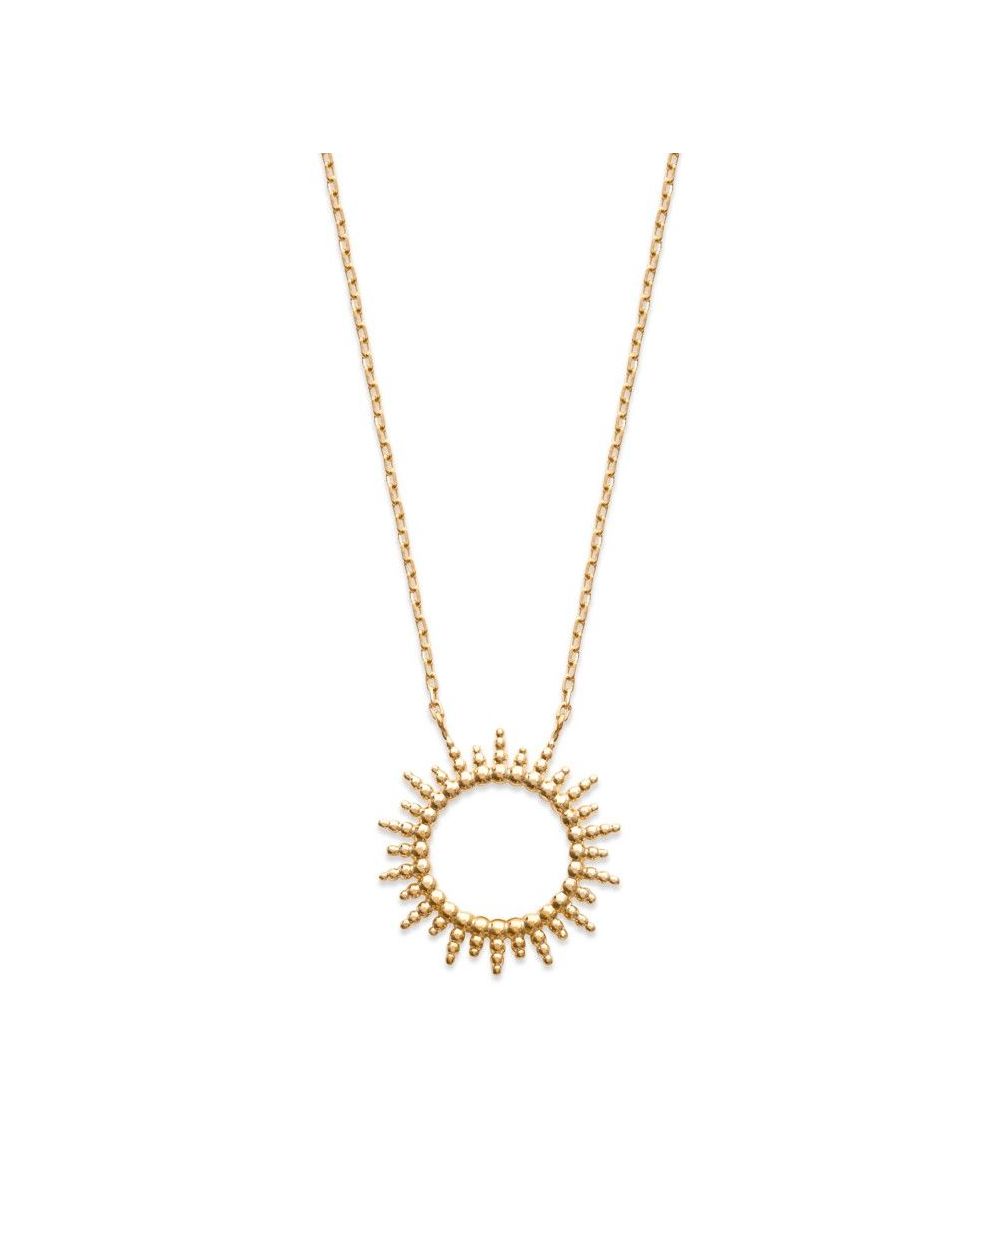 Golden sun disc necklace